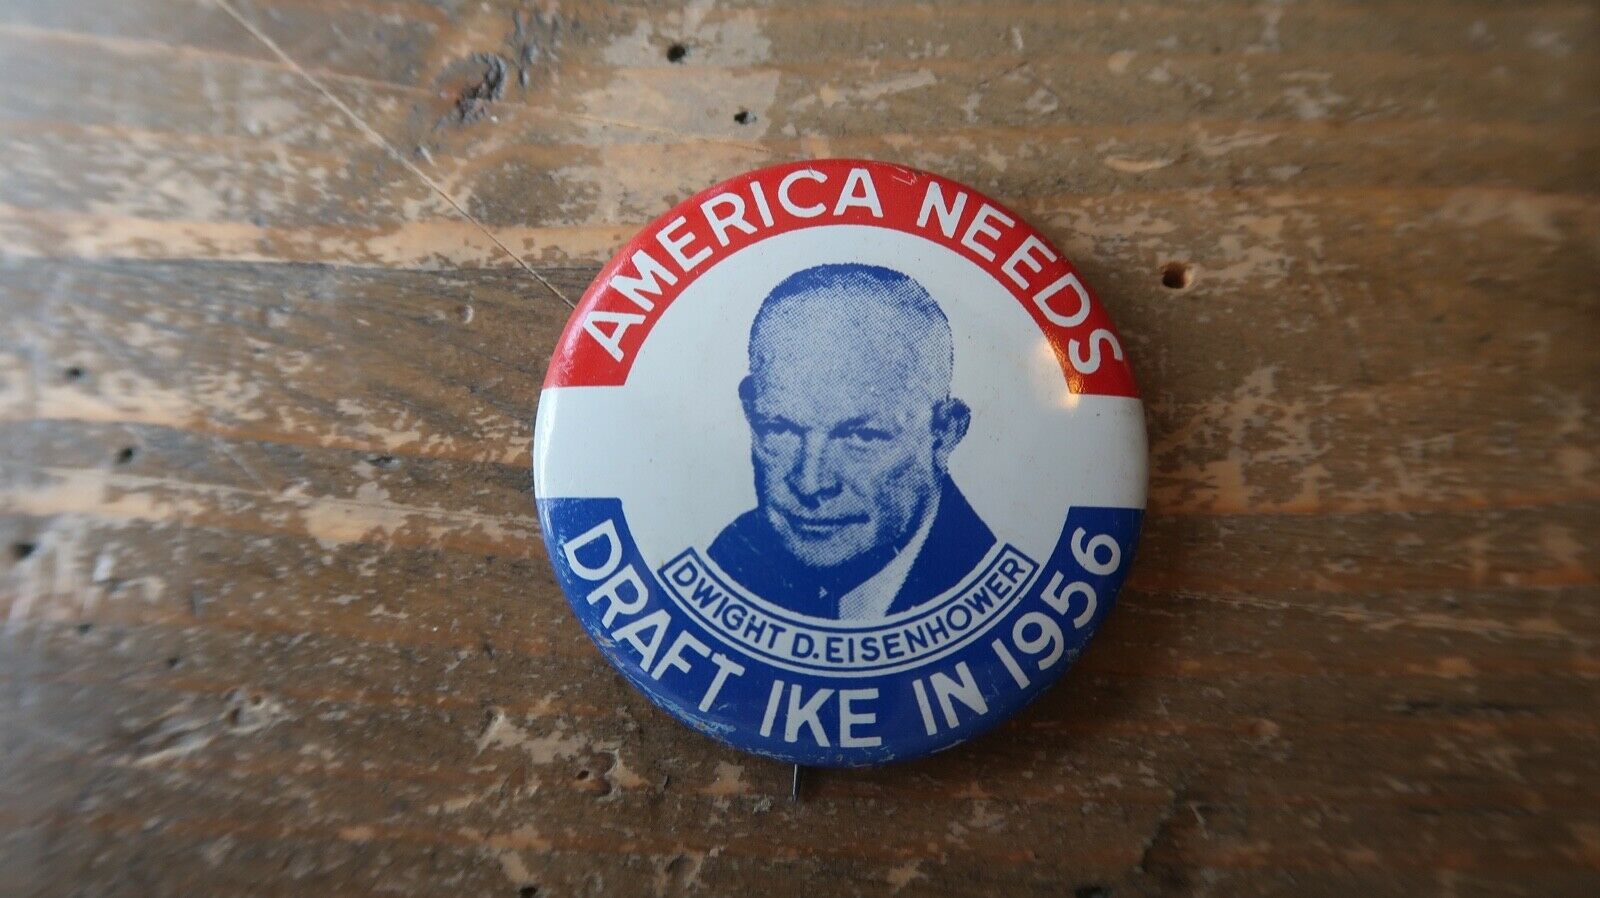 Dwight Eisenhower IKE Cracker Barrel Reproduction Campaign Pin Back